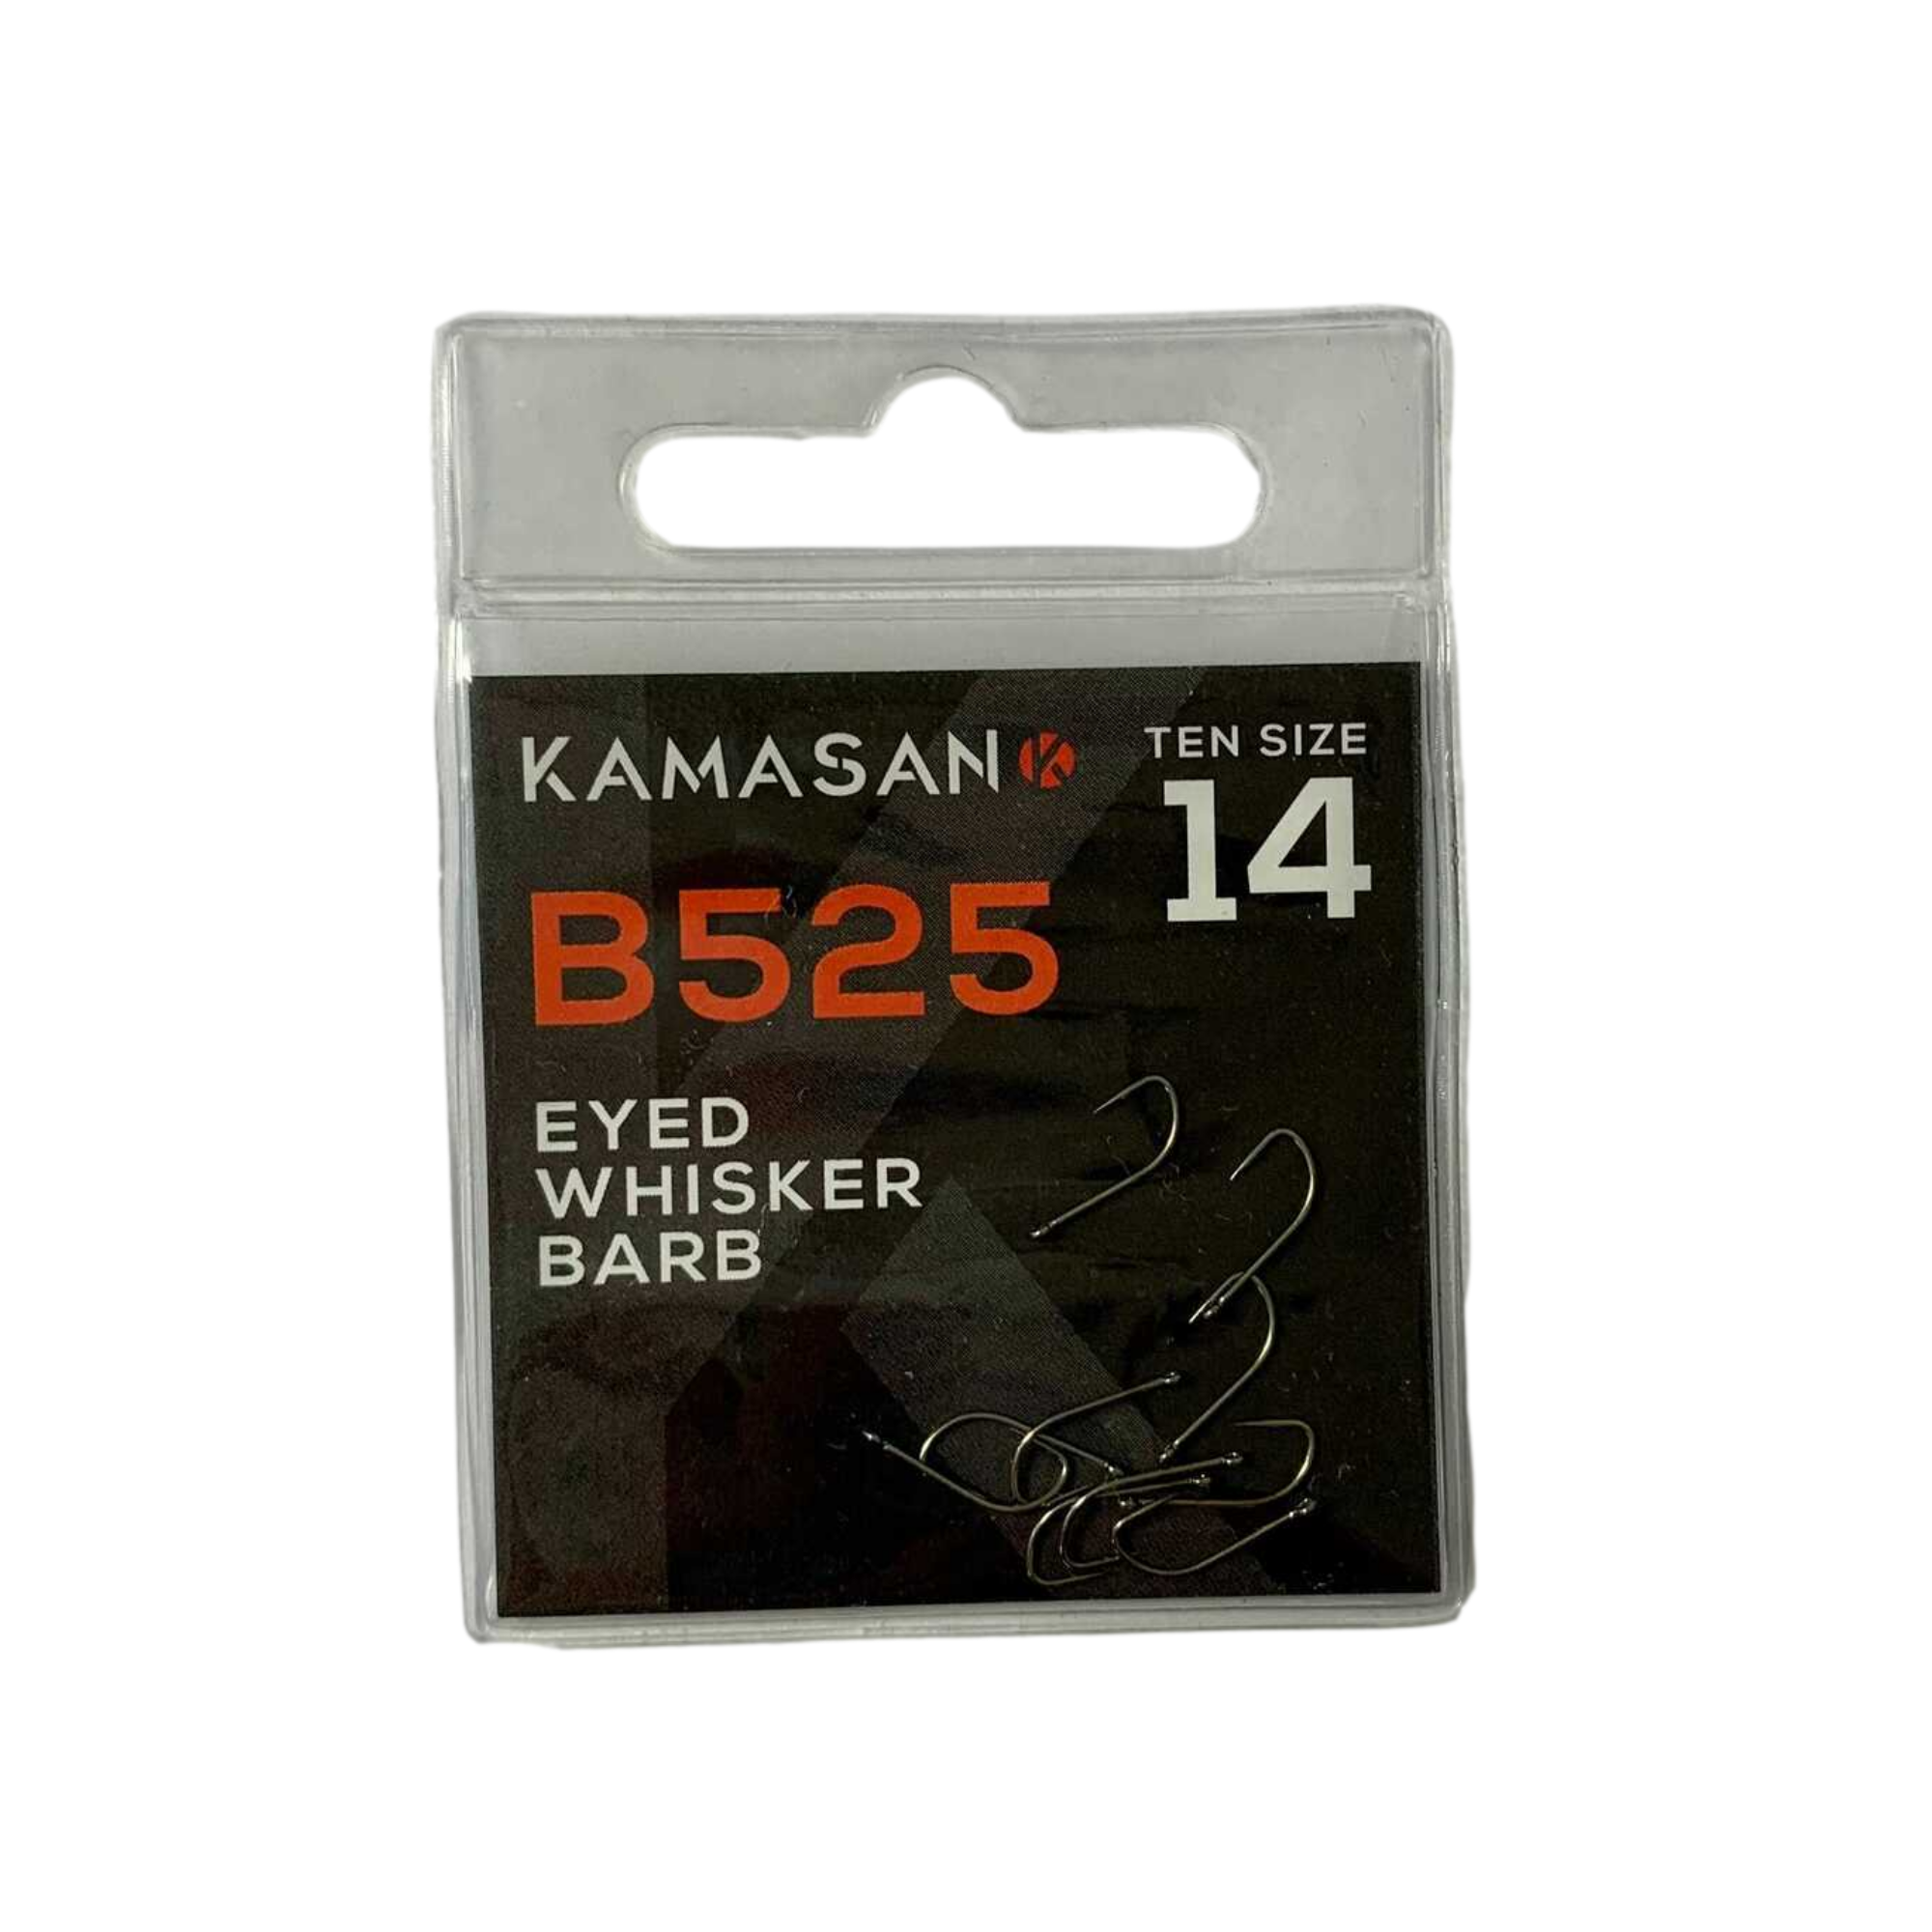 Details about   kamazan B525 eyed whisker barb size 20 10 pack hooks 